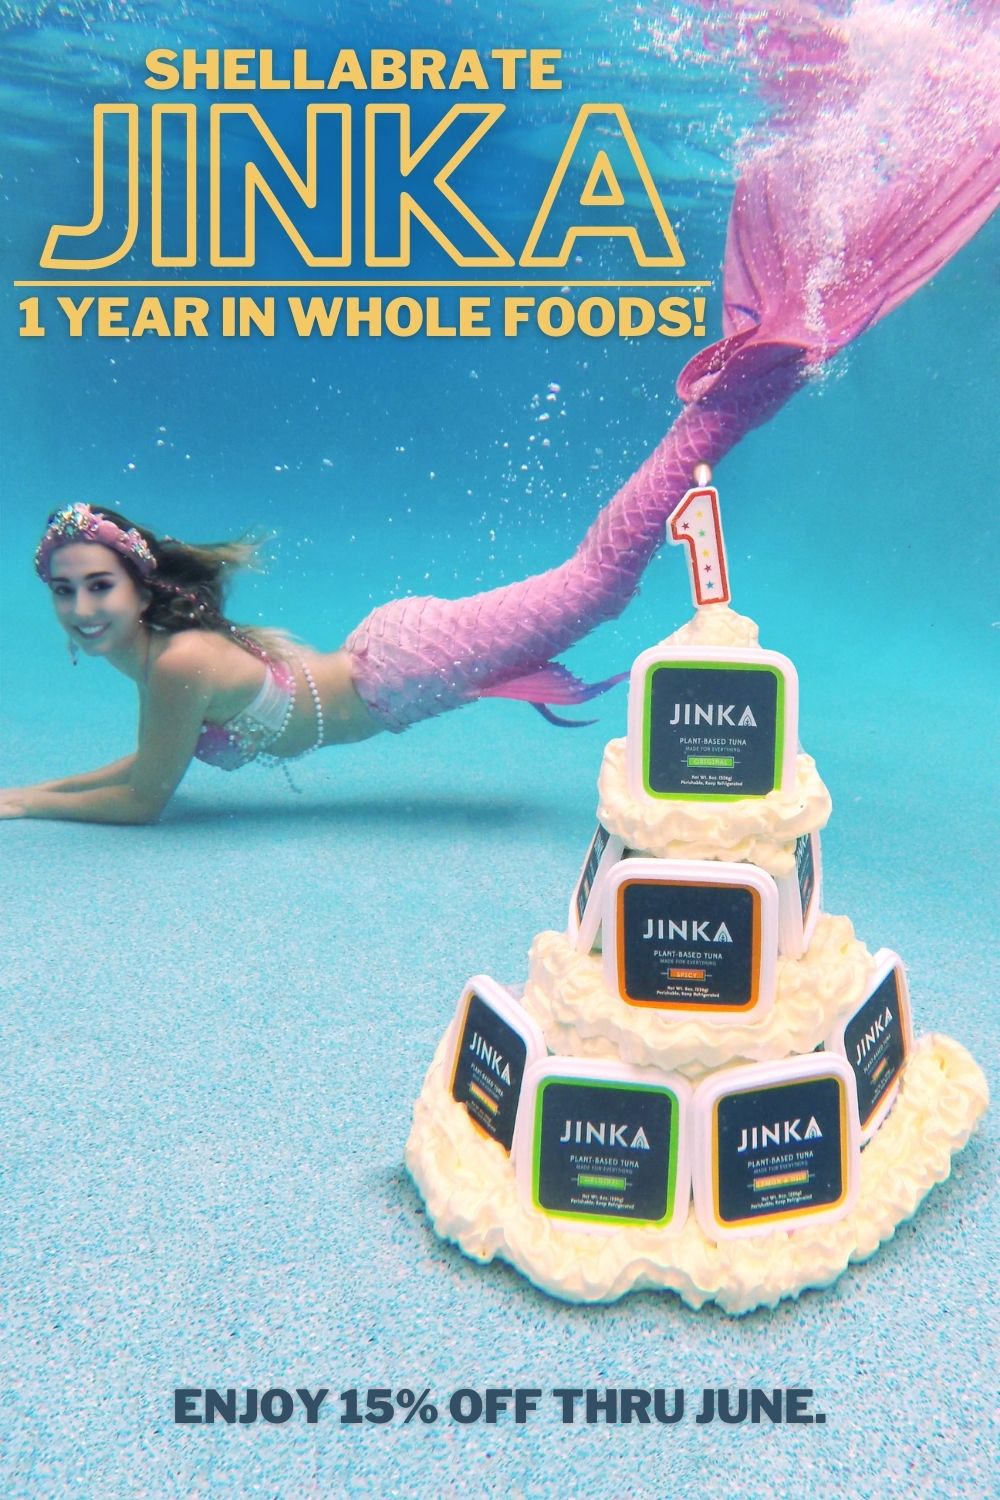 Mermaid Jules Shellabrates JINKA's one year anniversary in Whole Foods!